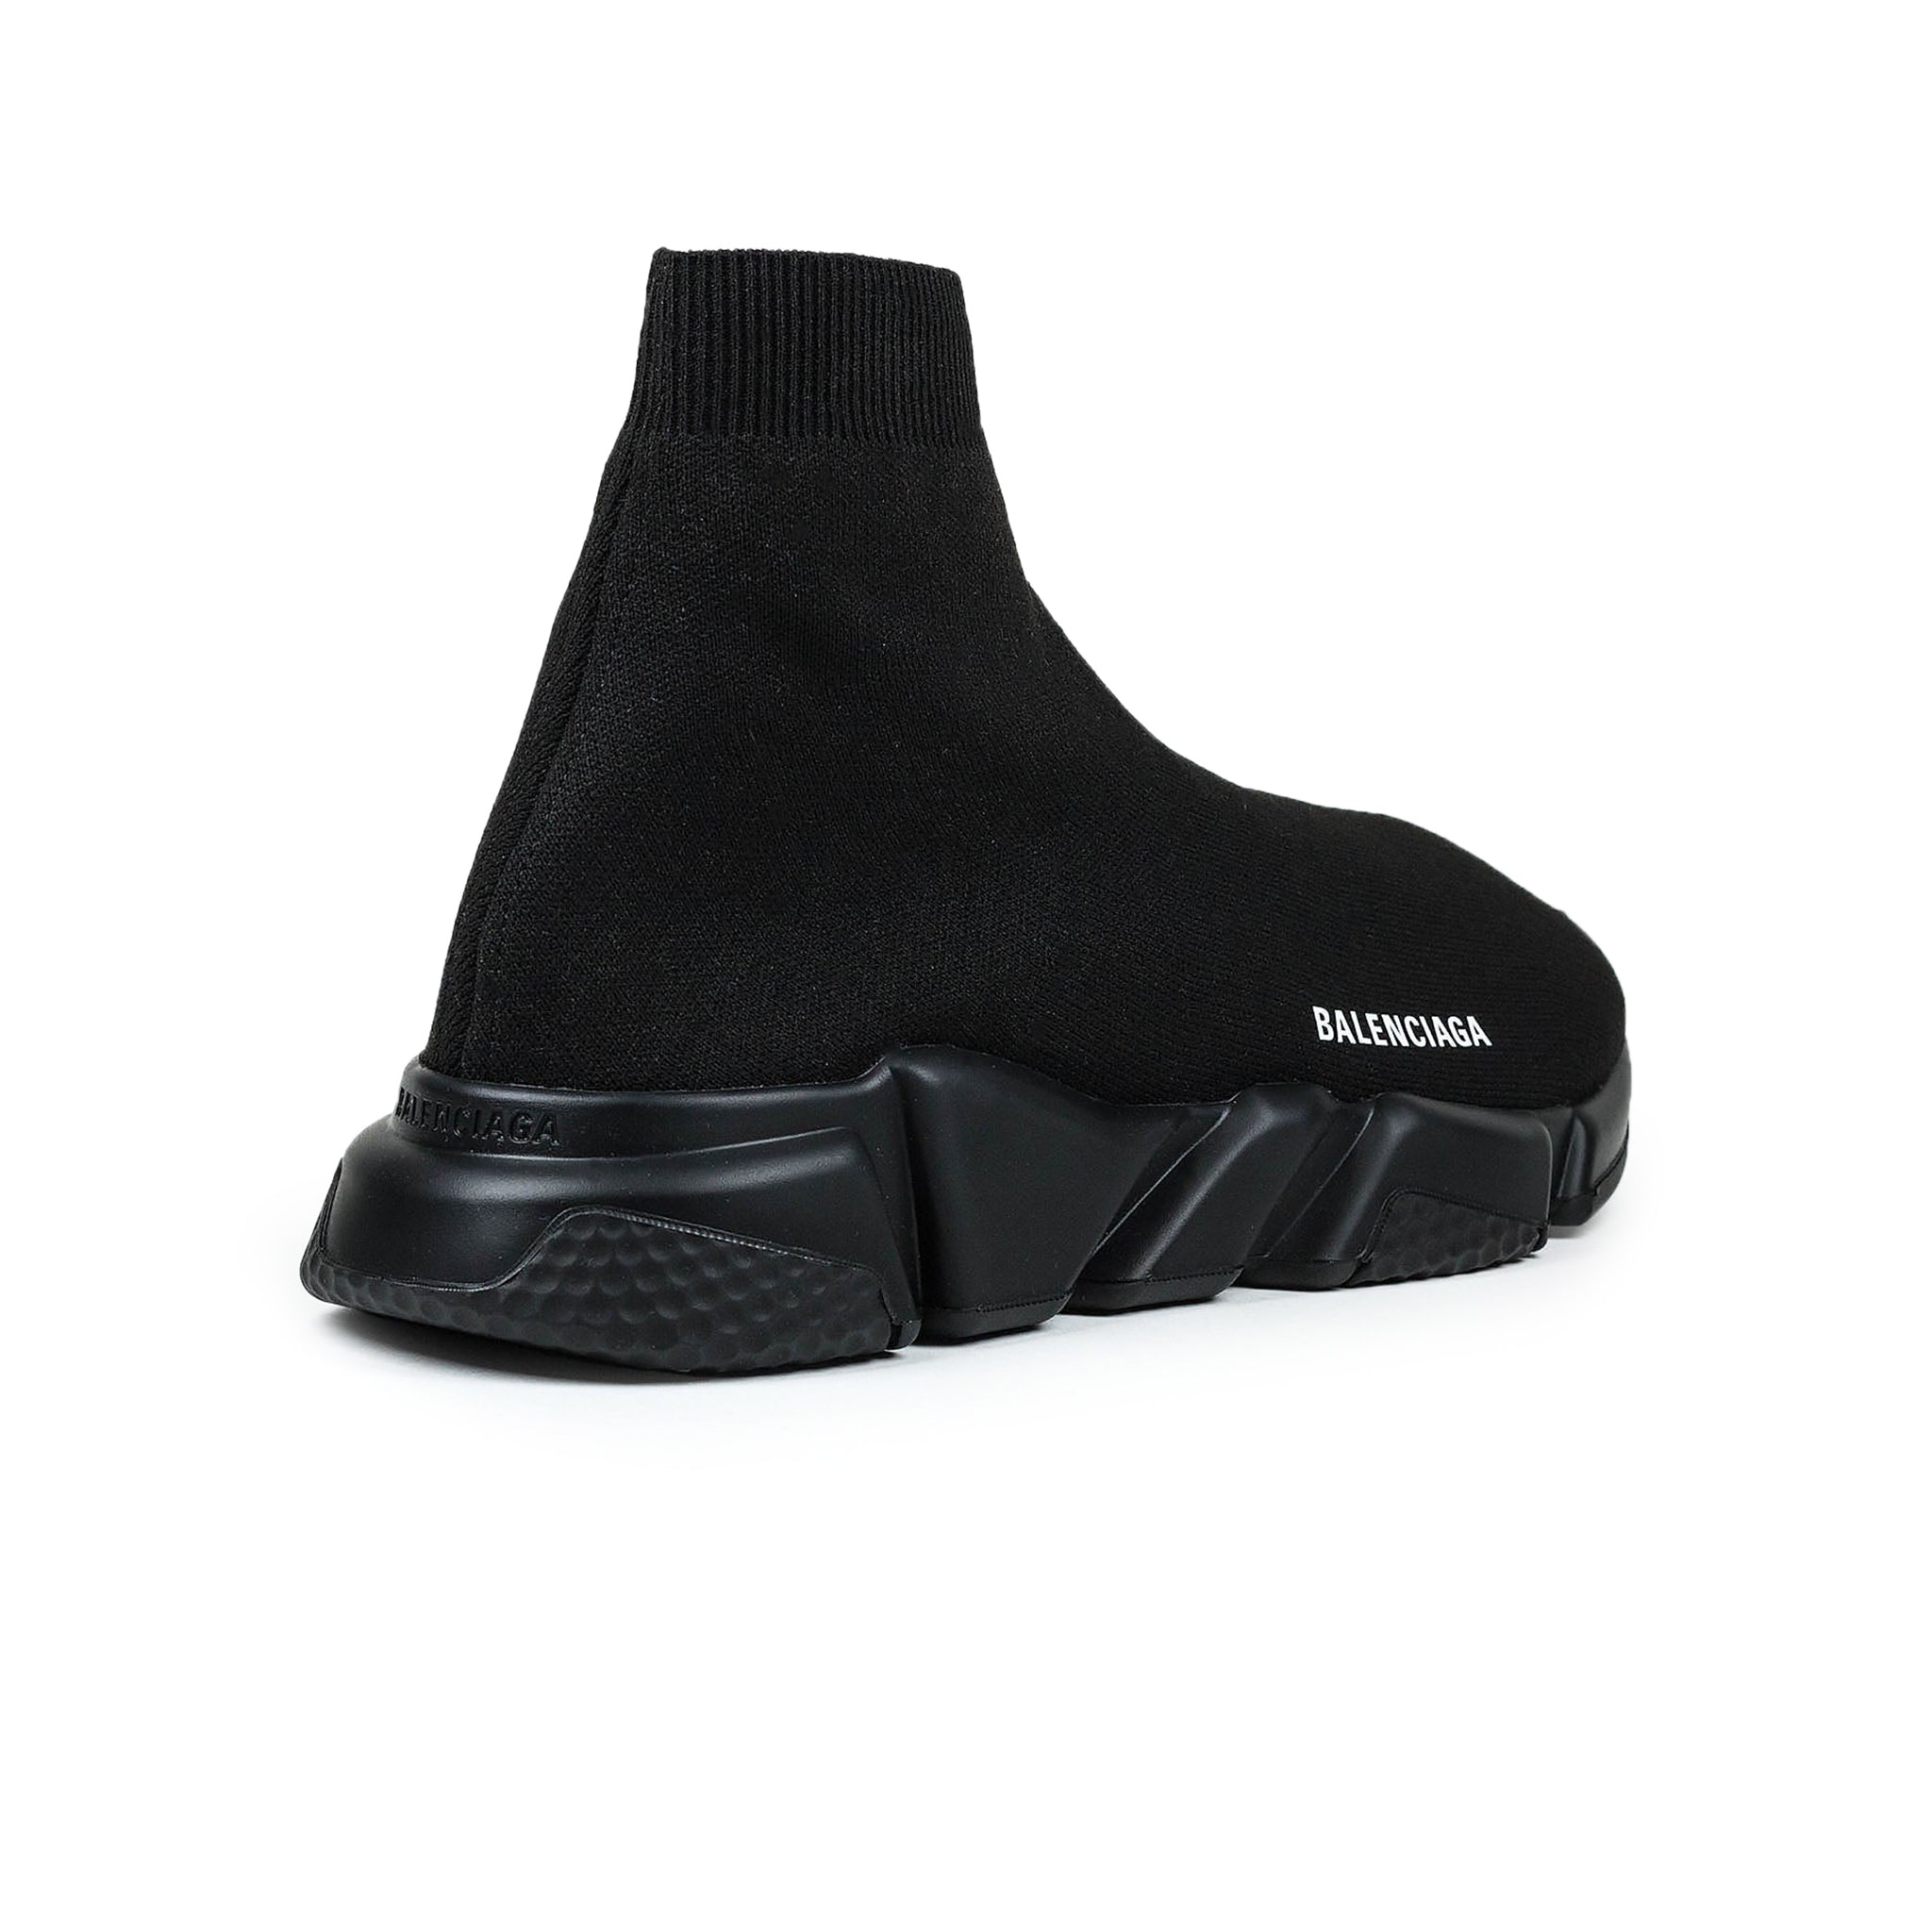 Image of Balenciaga Speed Knit Sock Triple Black